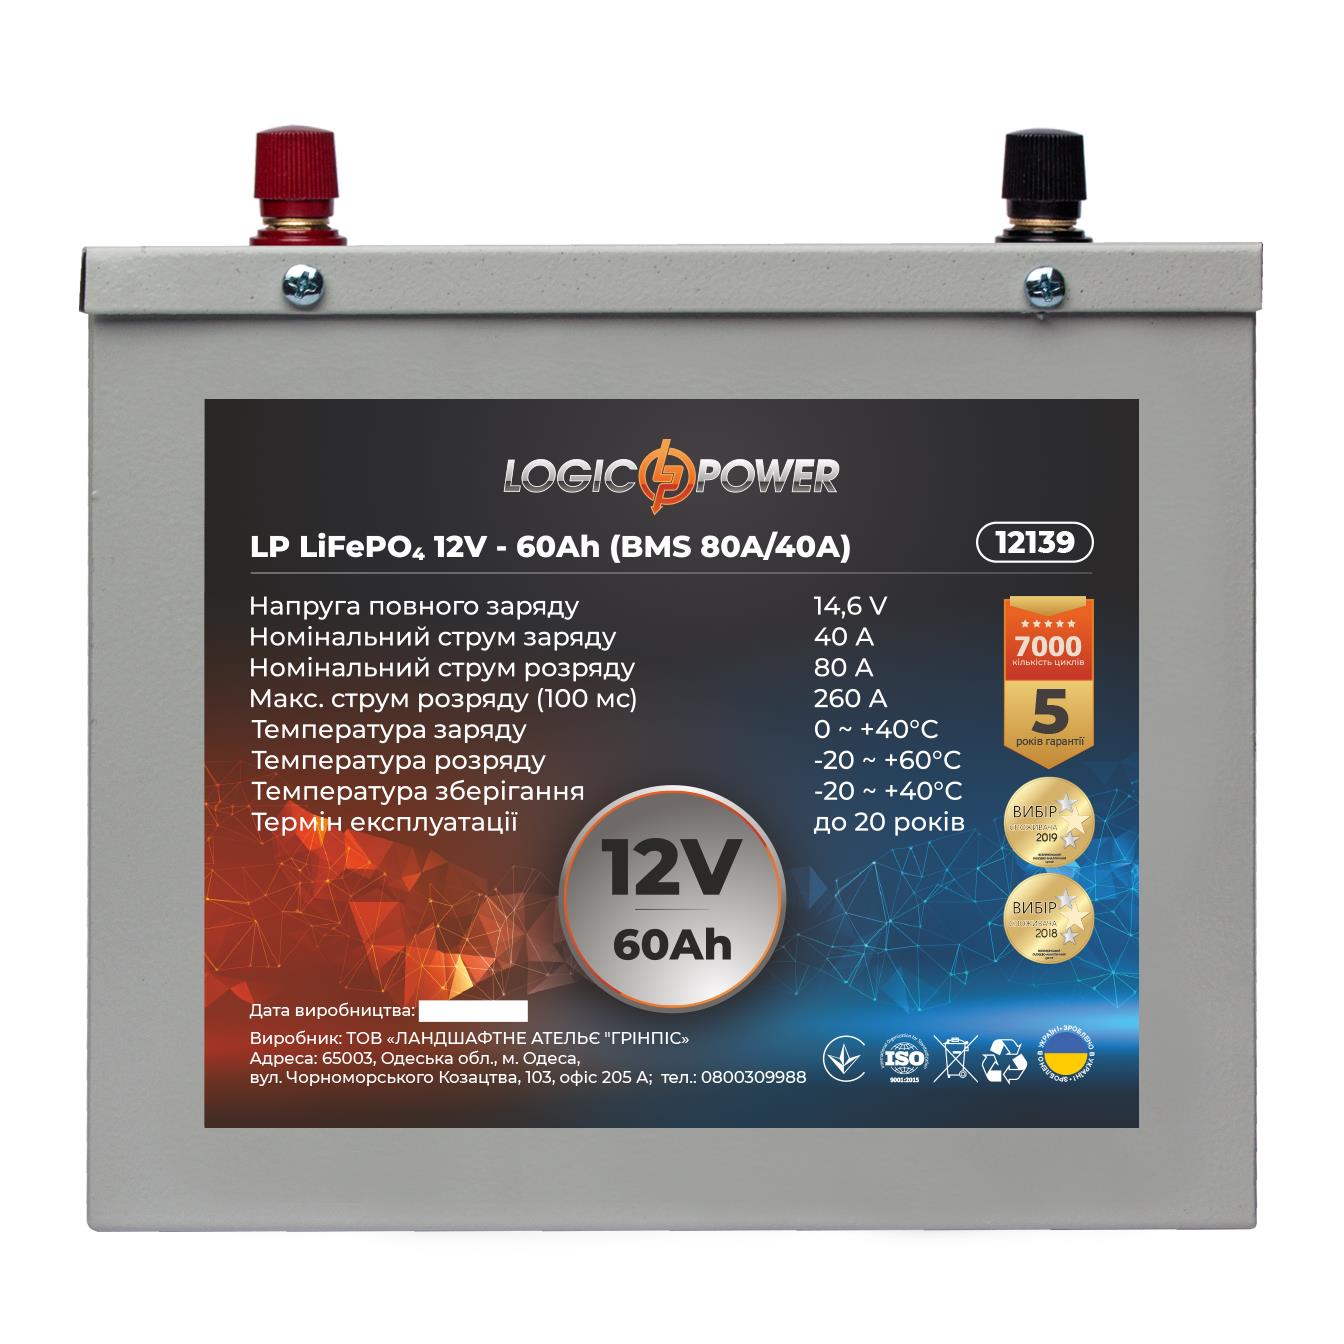 LogicPower LP LiFePO4 12V - 60 Ah (BMS 80A/40A) металл (12139)